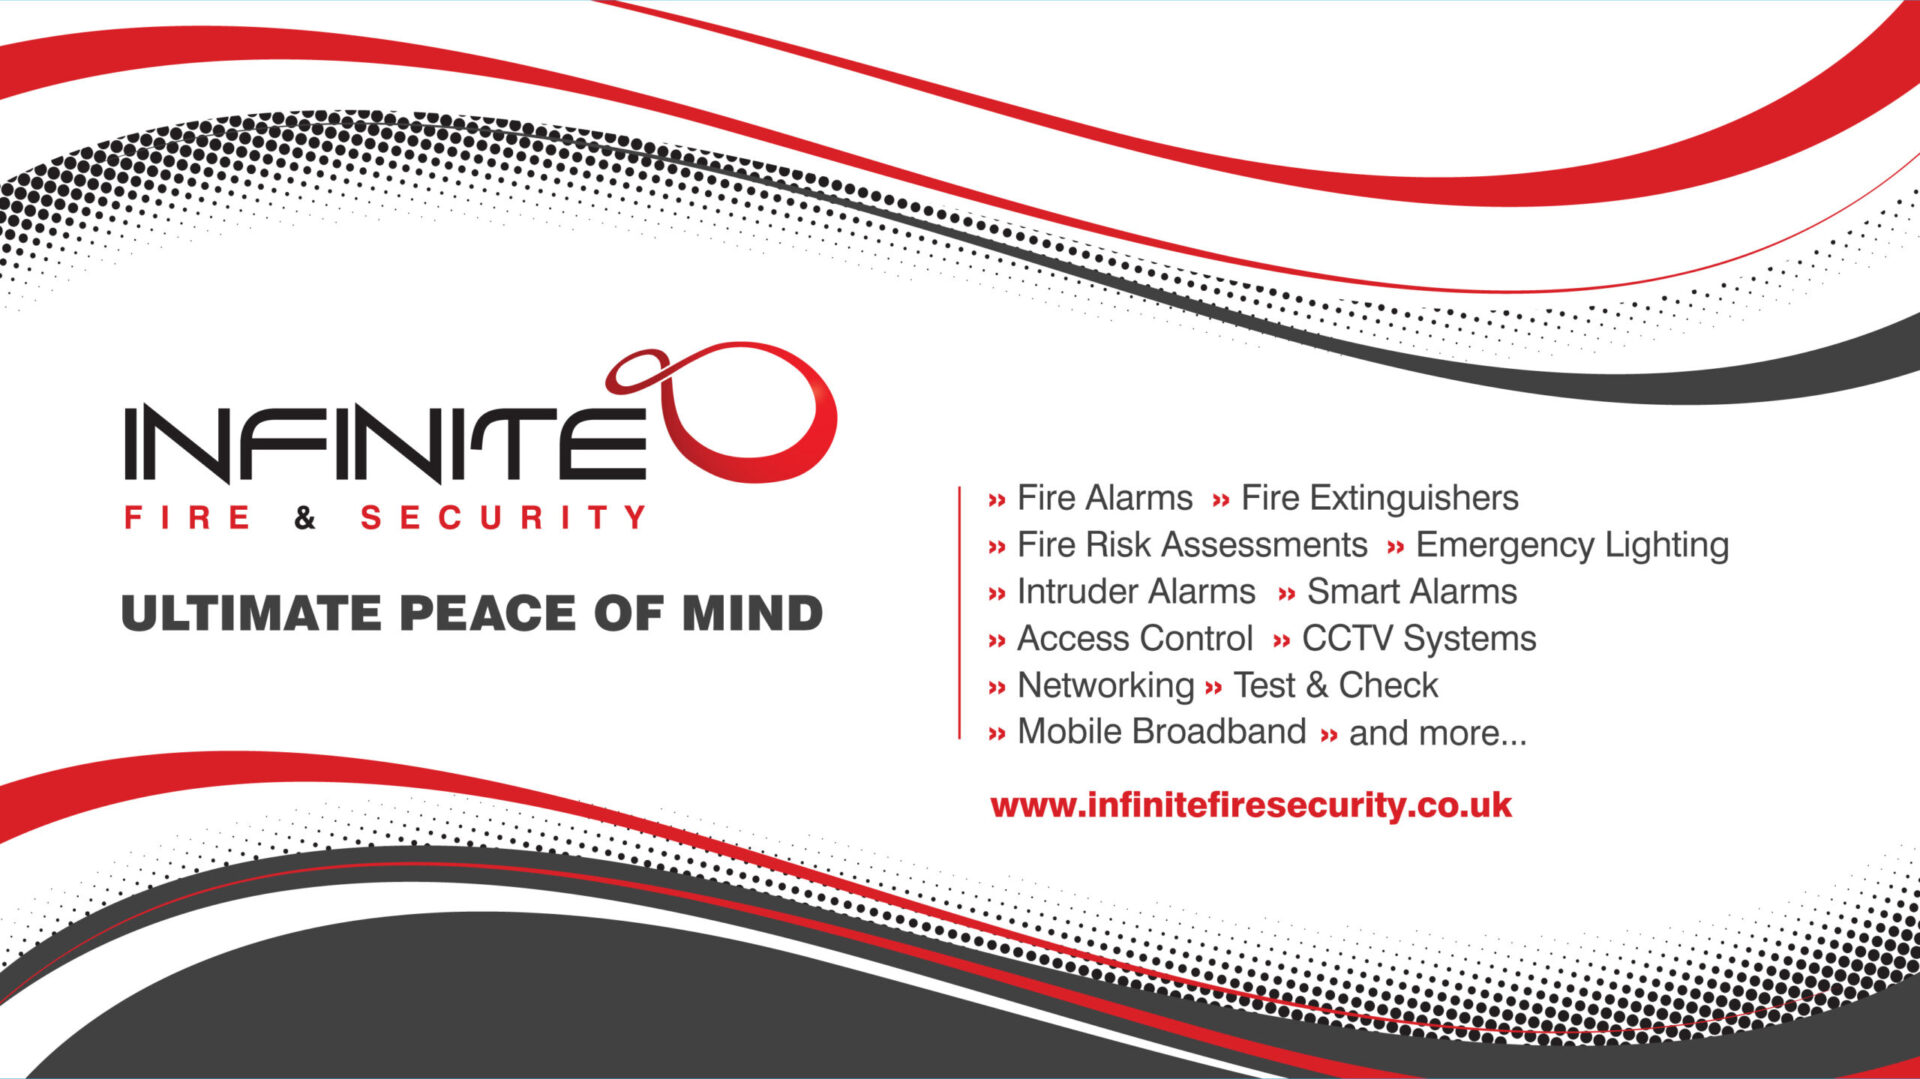 Infinite Fire & Security Ltd